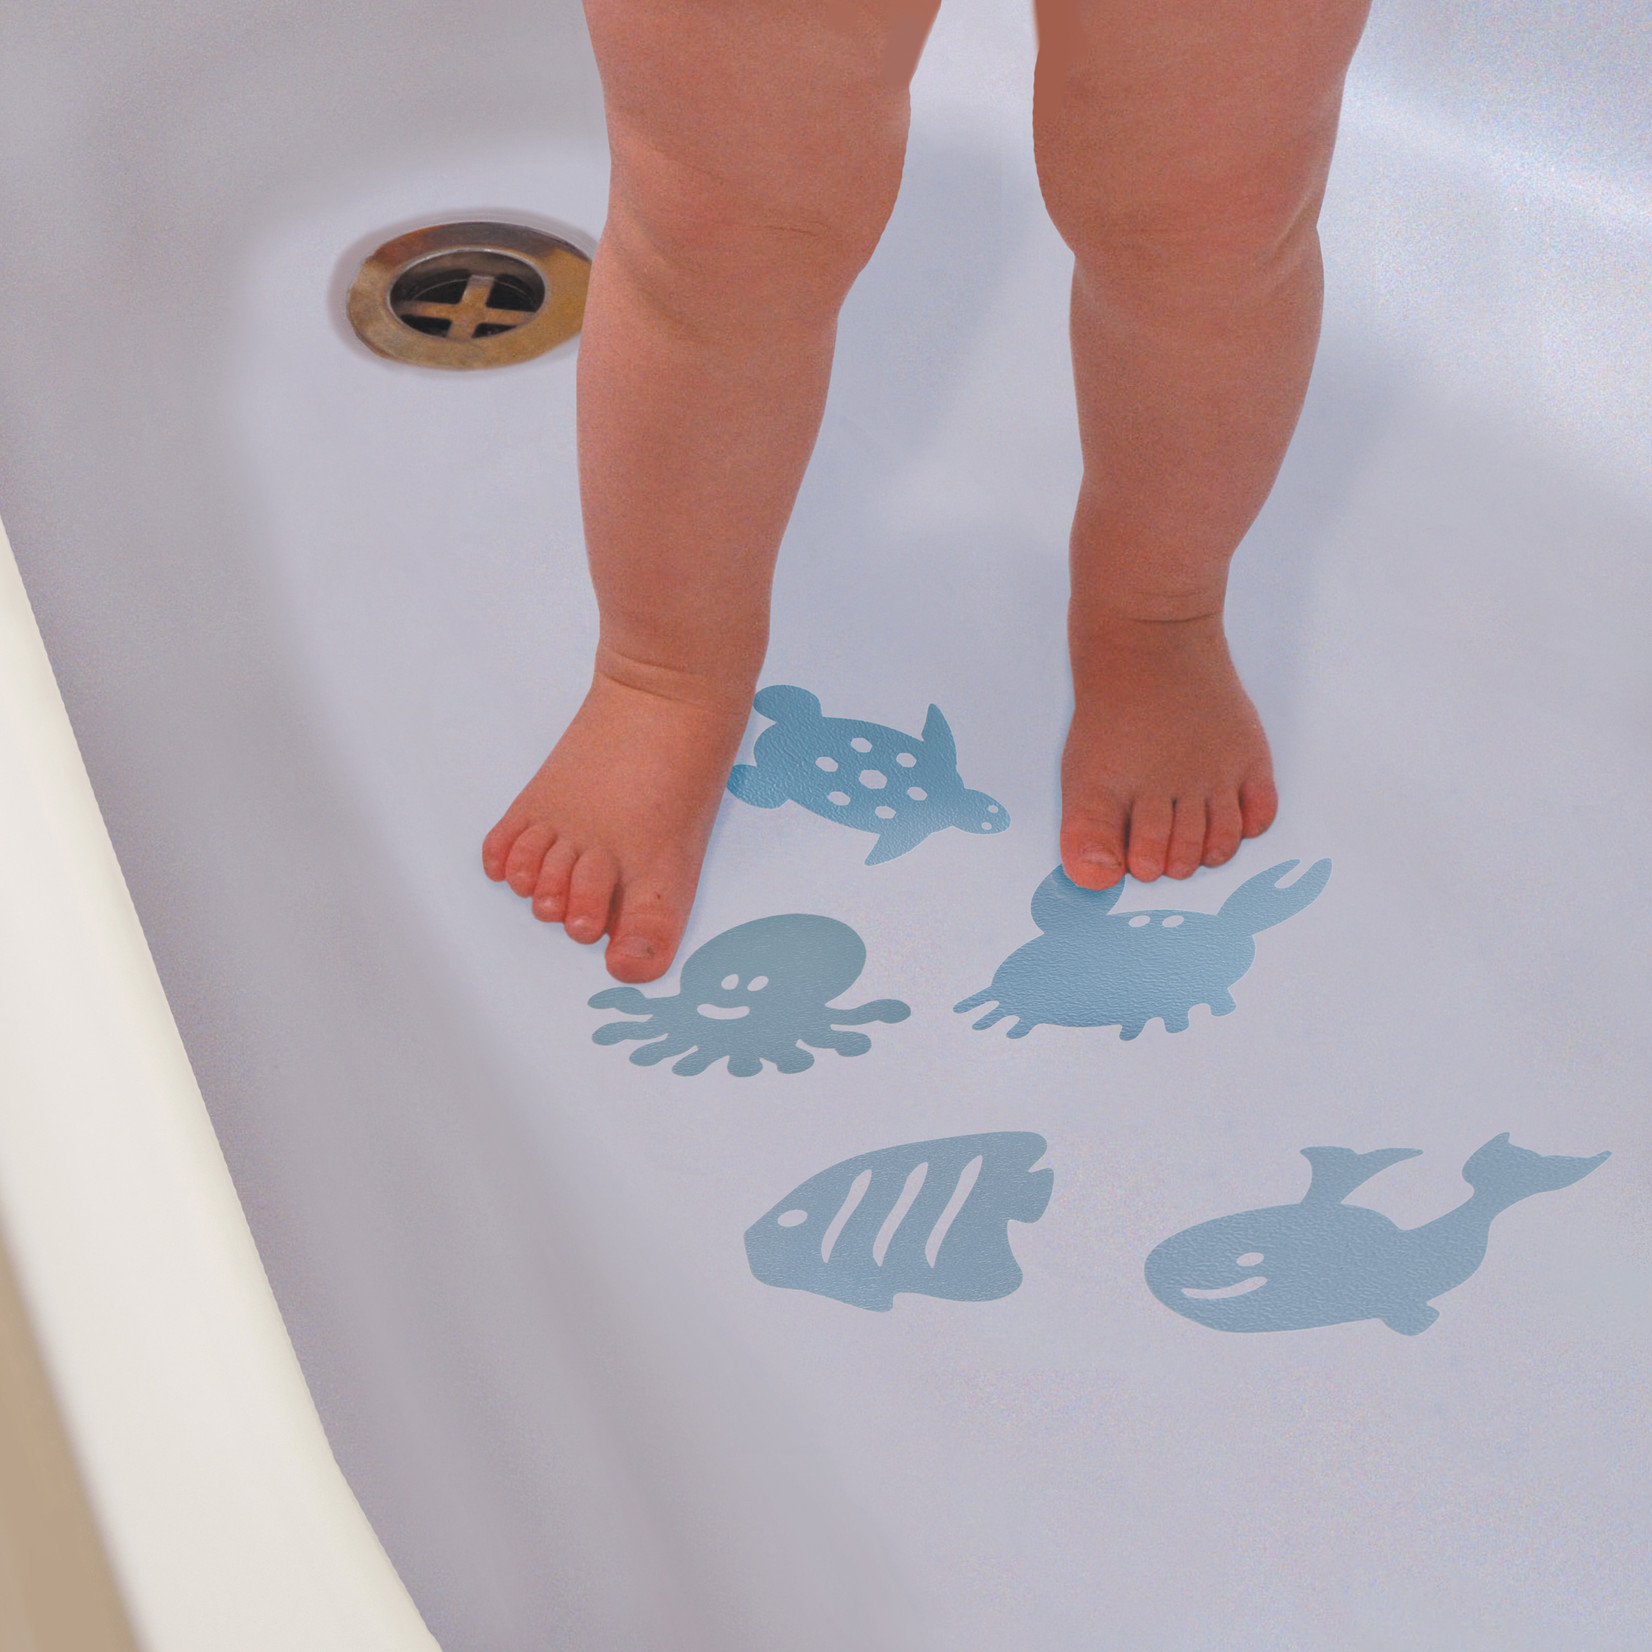 Dreambaby WATCH-YOUR-STEP® HEAT ALERT ANTI-SLIP BATH MATS 10PK